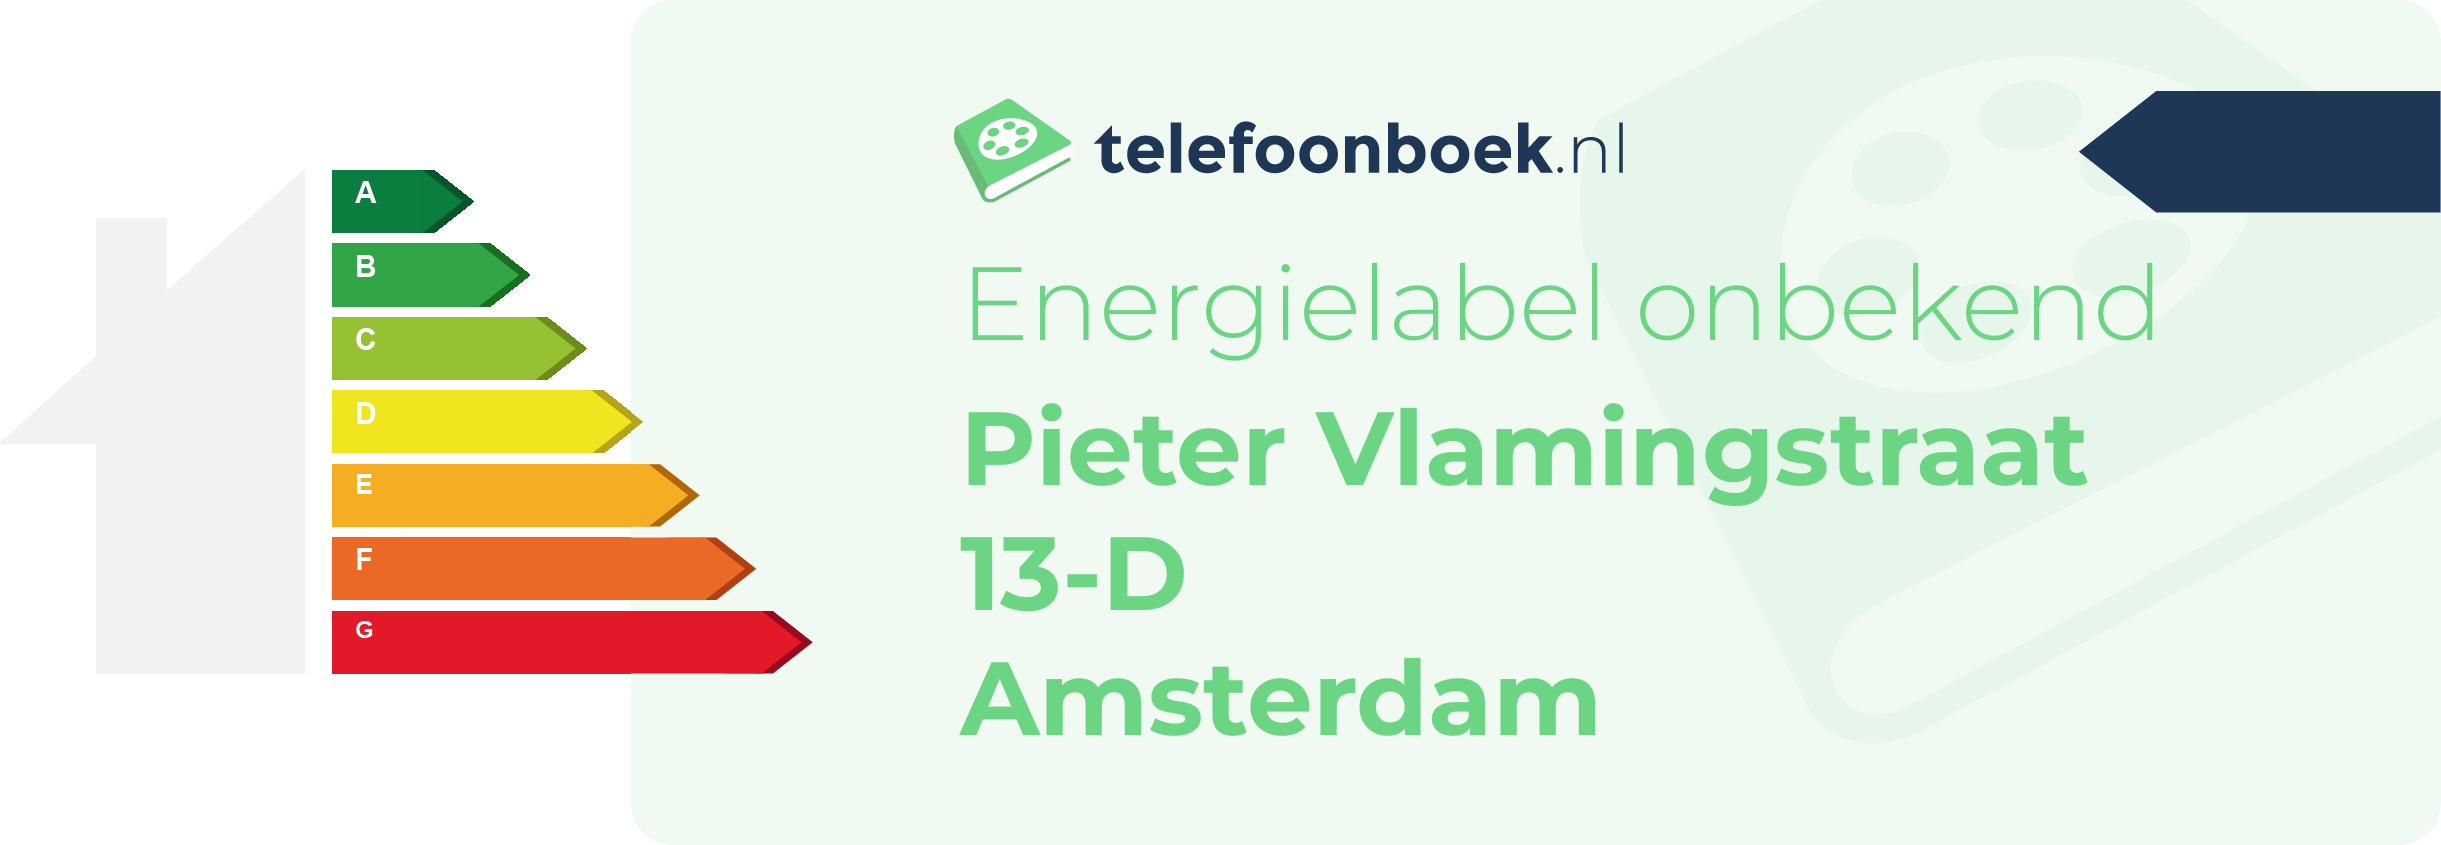 Energielabel Pieter Vlamingstraat 13-D Amsterdam